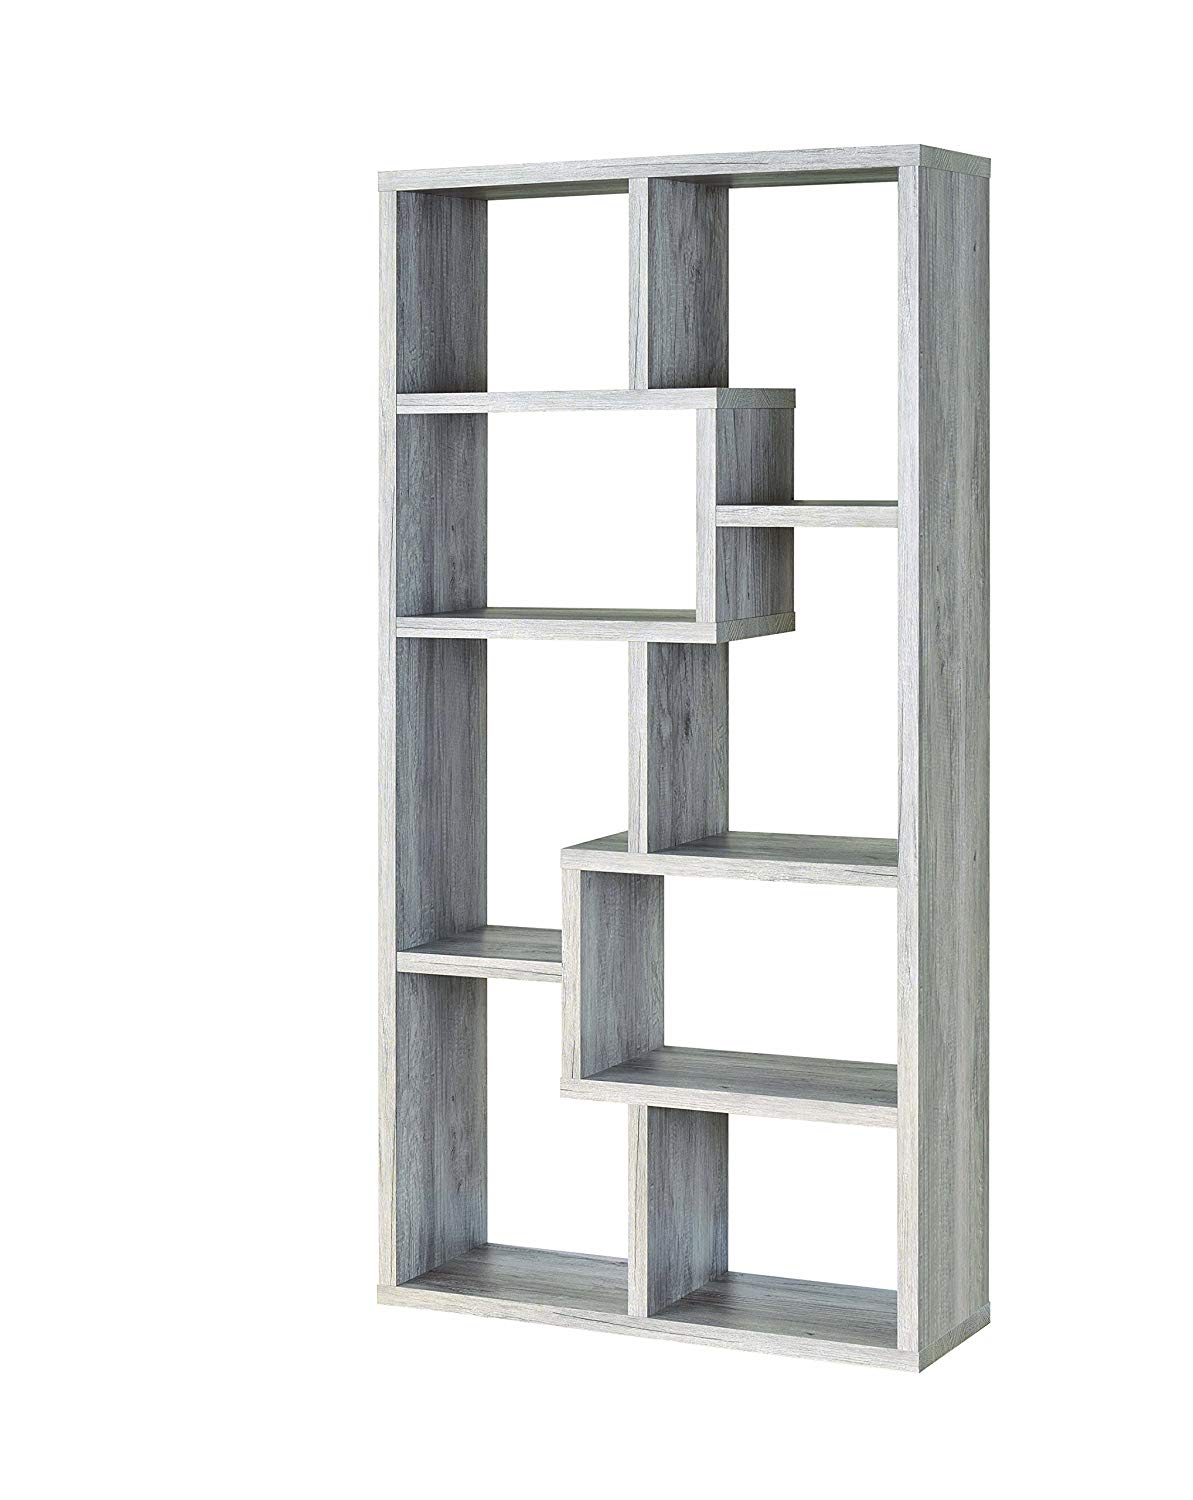 Modish Wooden Bookcase With Multiple Shelves, Gray -BM159410